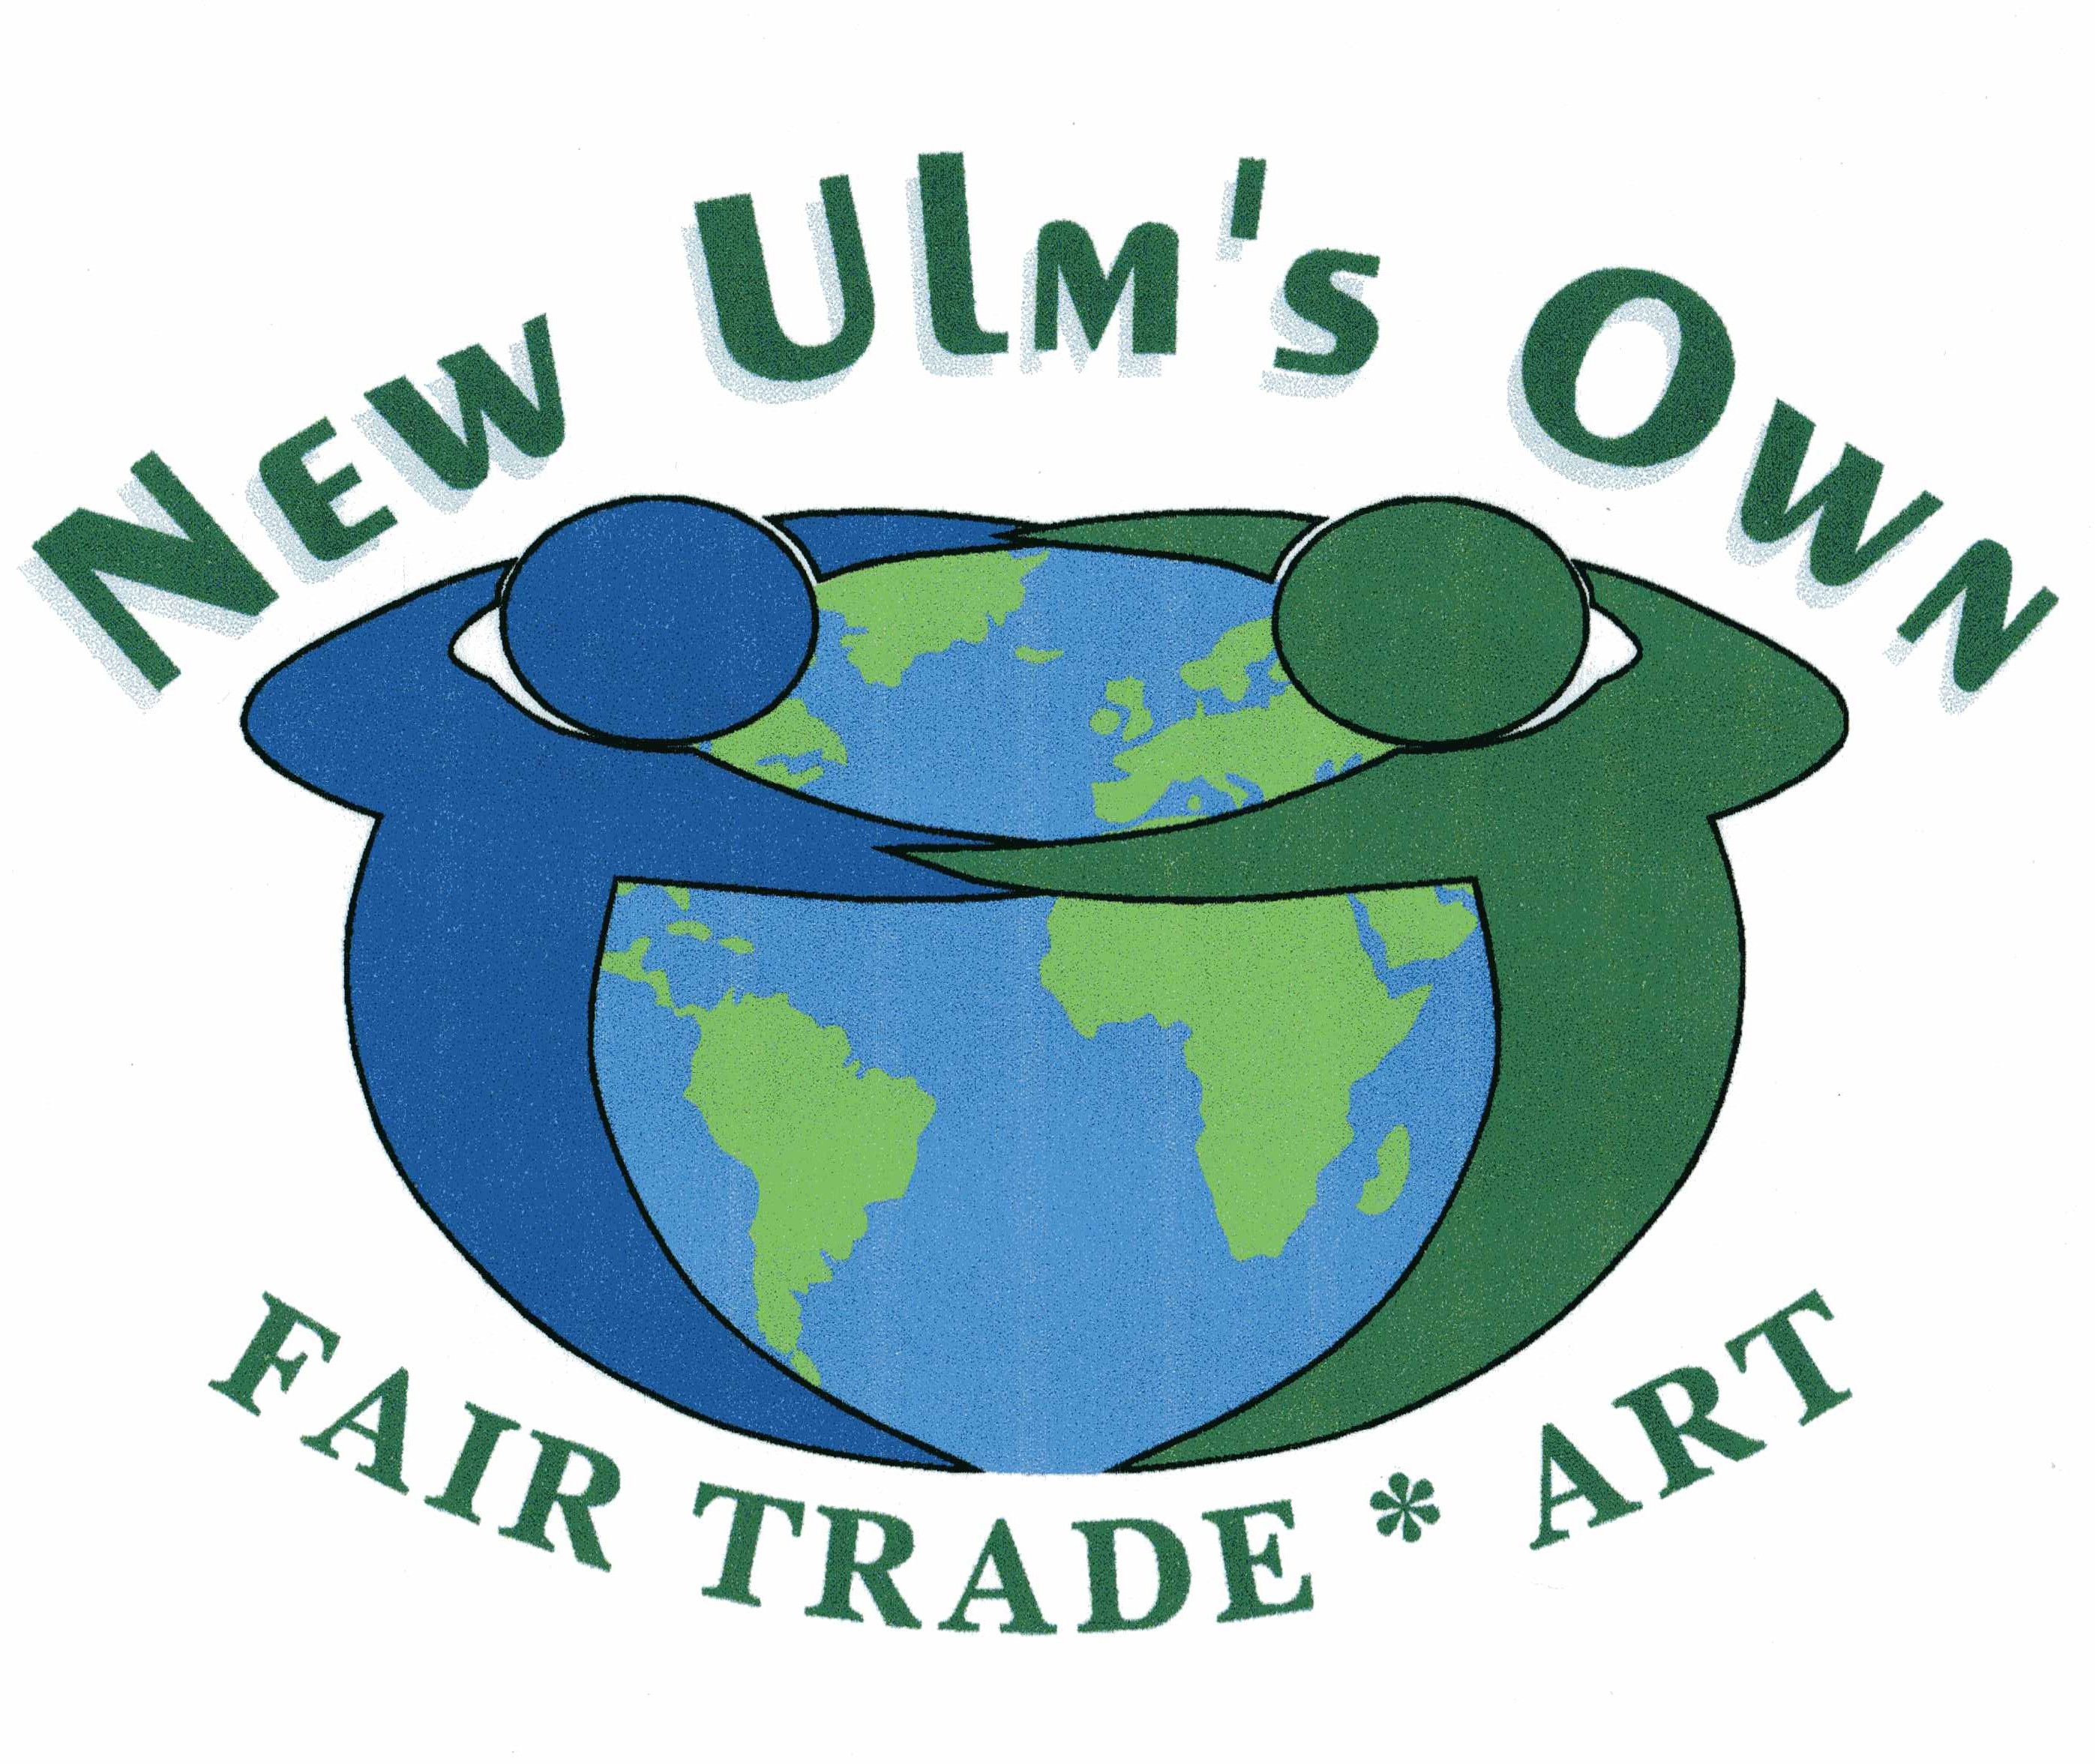 New Ulm's Own - Fair Trade and Art